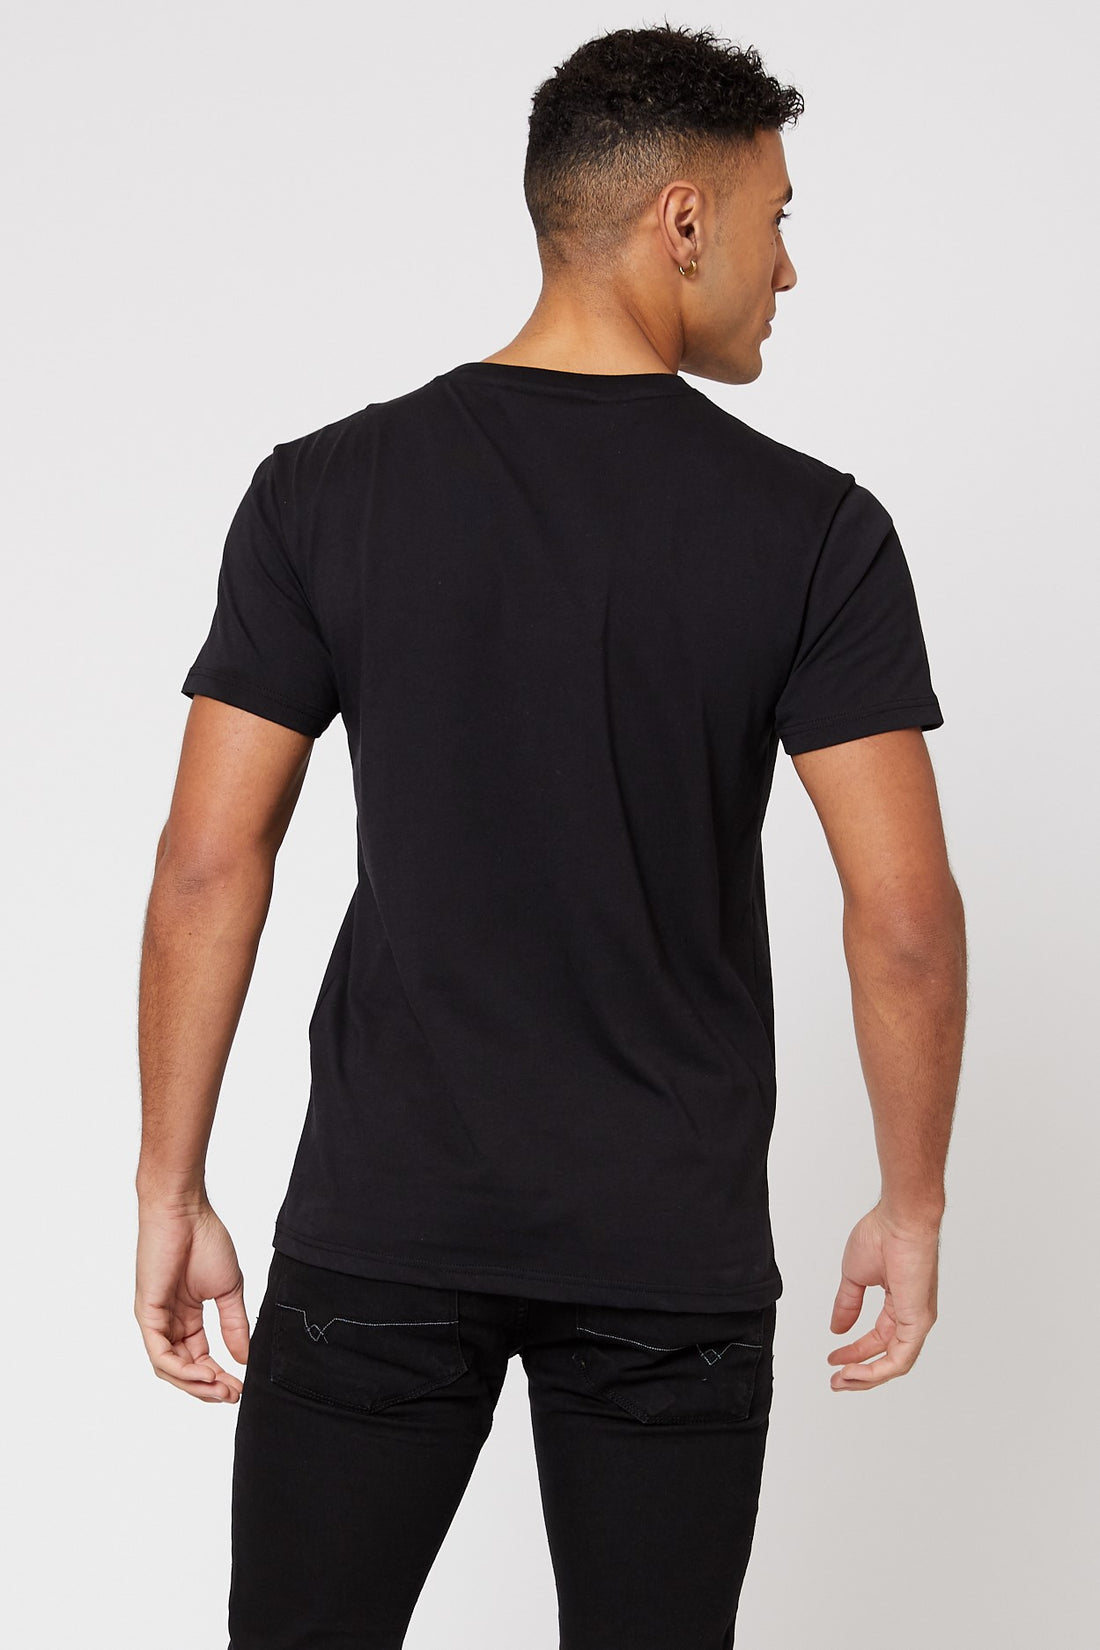 Leyton T-Shirt - Black